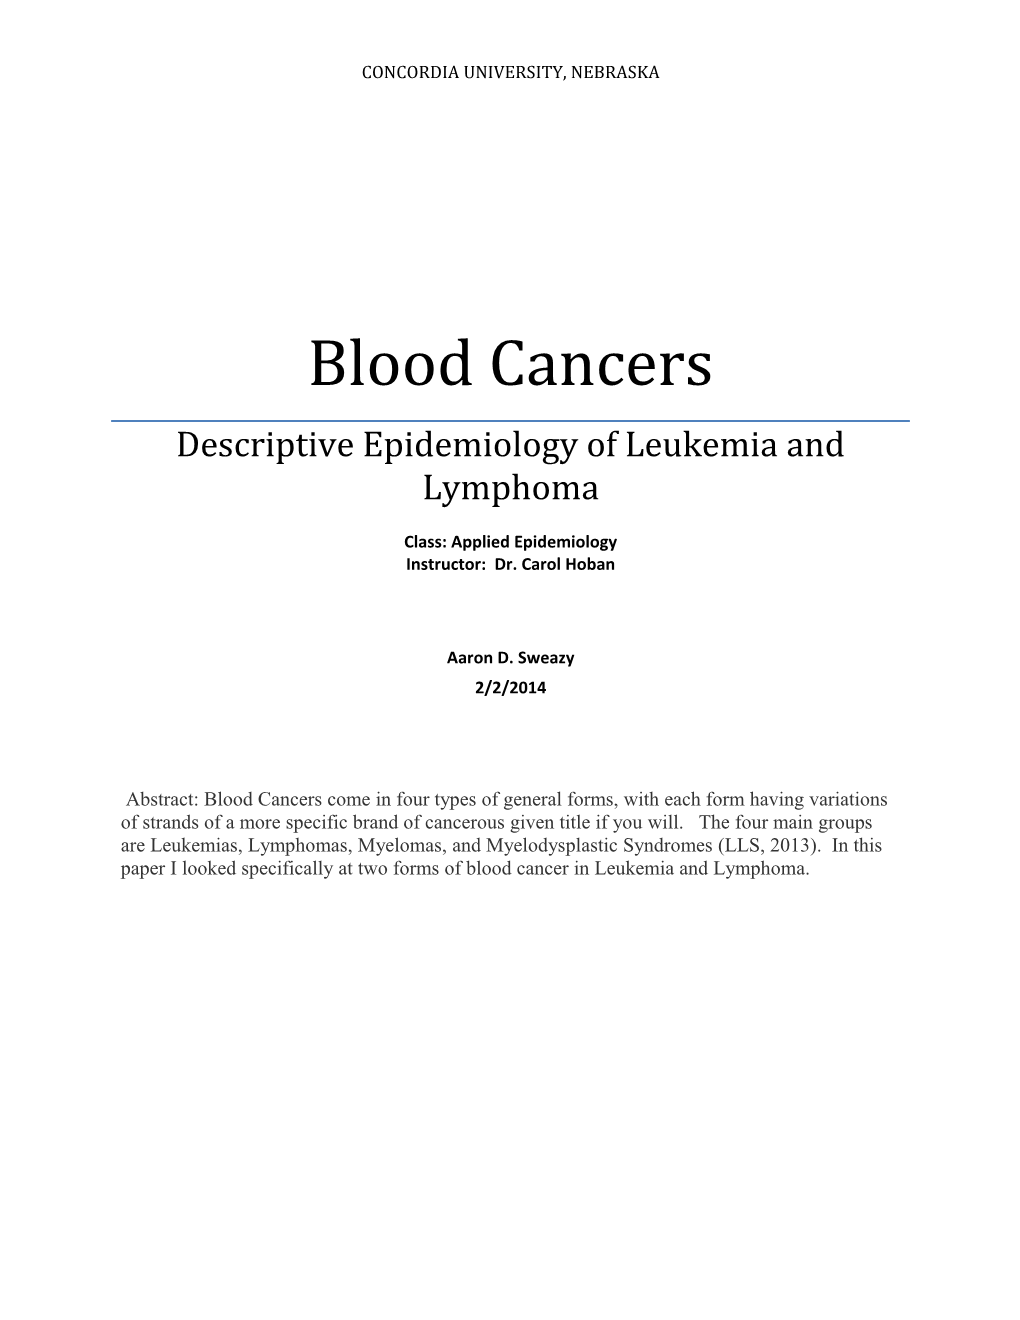 Blood Cancer Types 7